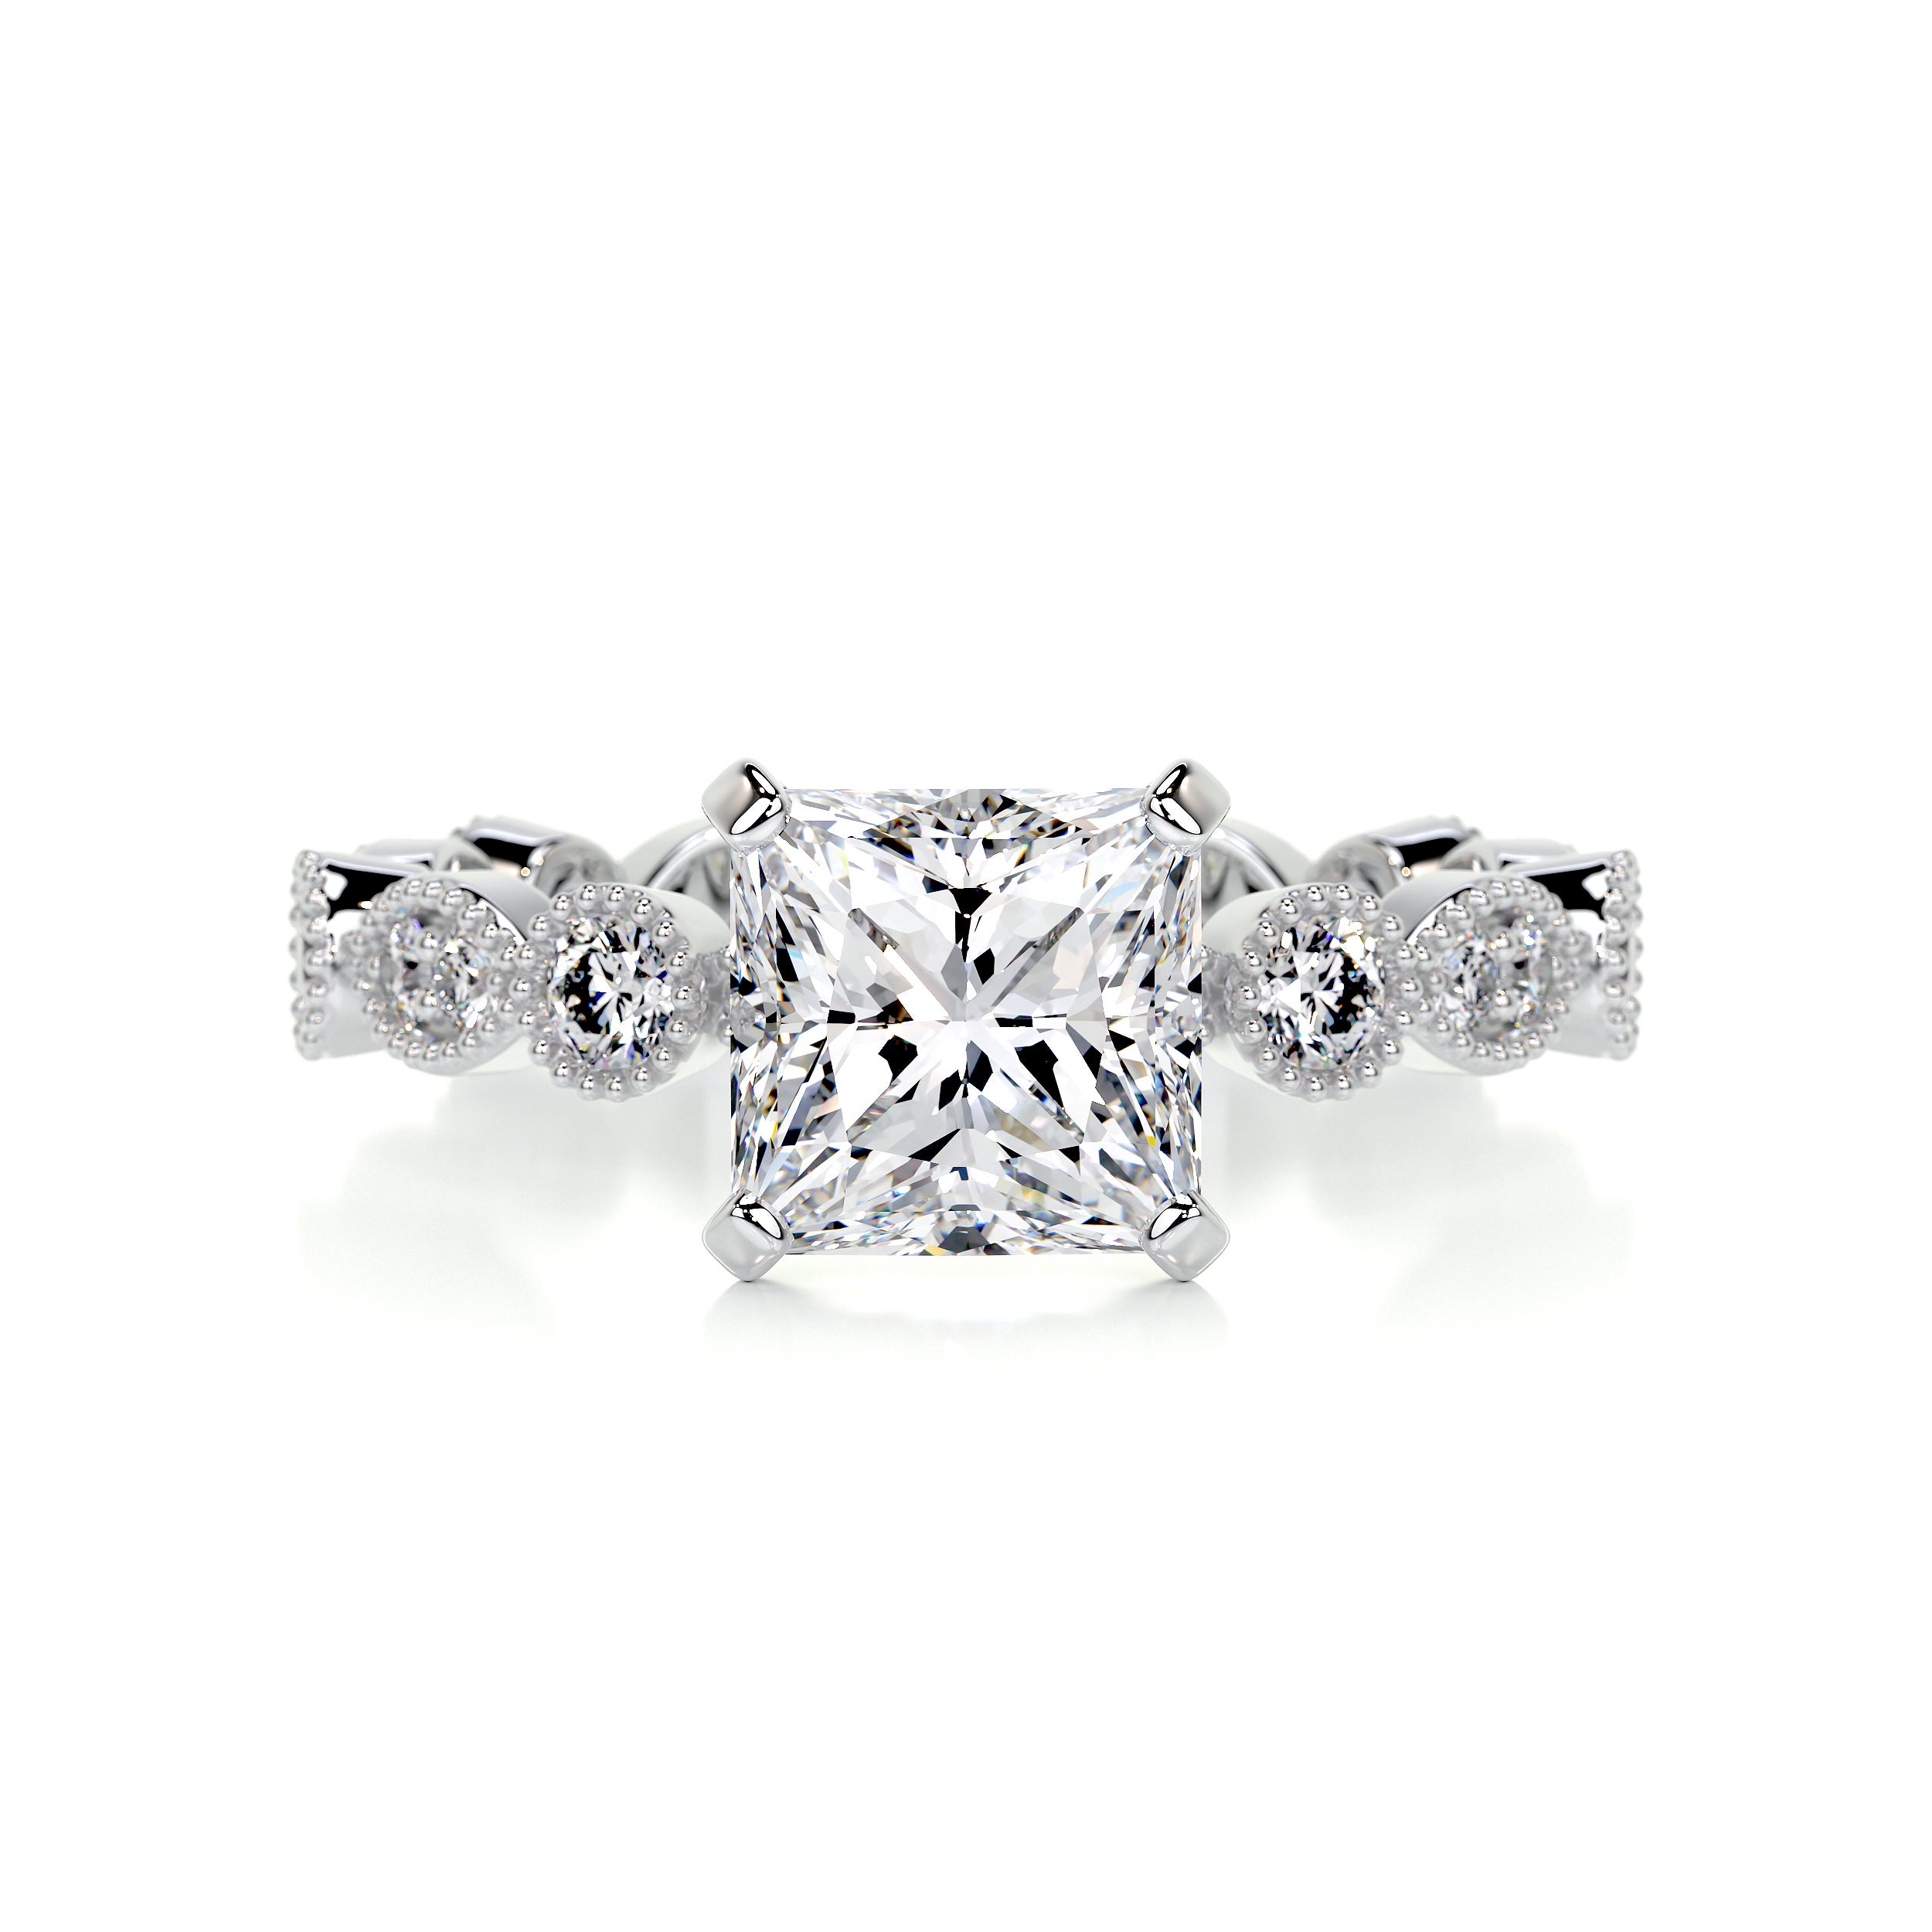 Amelia Diamond Engagement Ring   (2.5 Carat) -14K White Gold